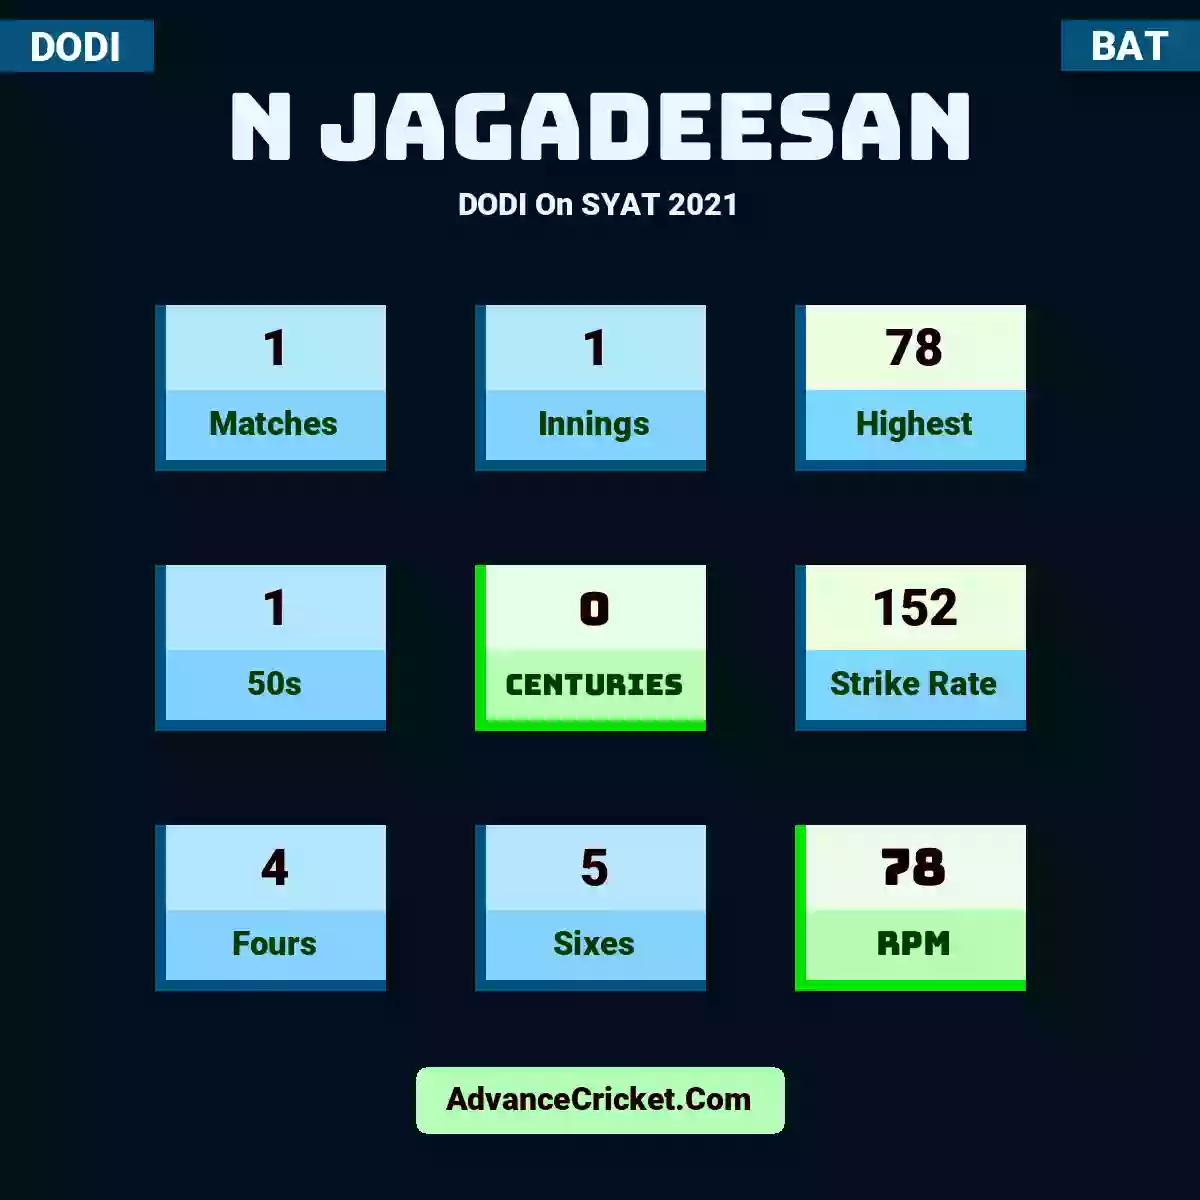 N Jagadeesan DODI  On SYAT 2021, N Jagadeesan played 1 matches, scored 78 runs as highest, 1 half-centuries, and 0 centuries, with a strike rate of 152. N.Jagadeesan hit 4 fours and 5 sixes, with an RPM of 78.